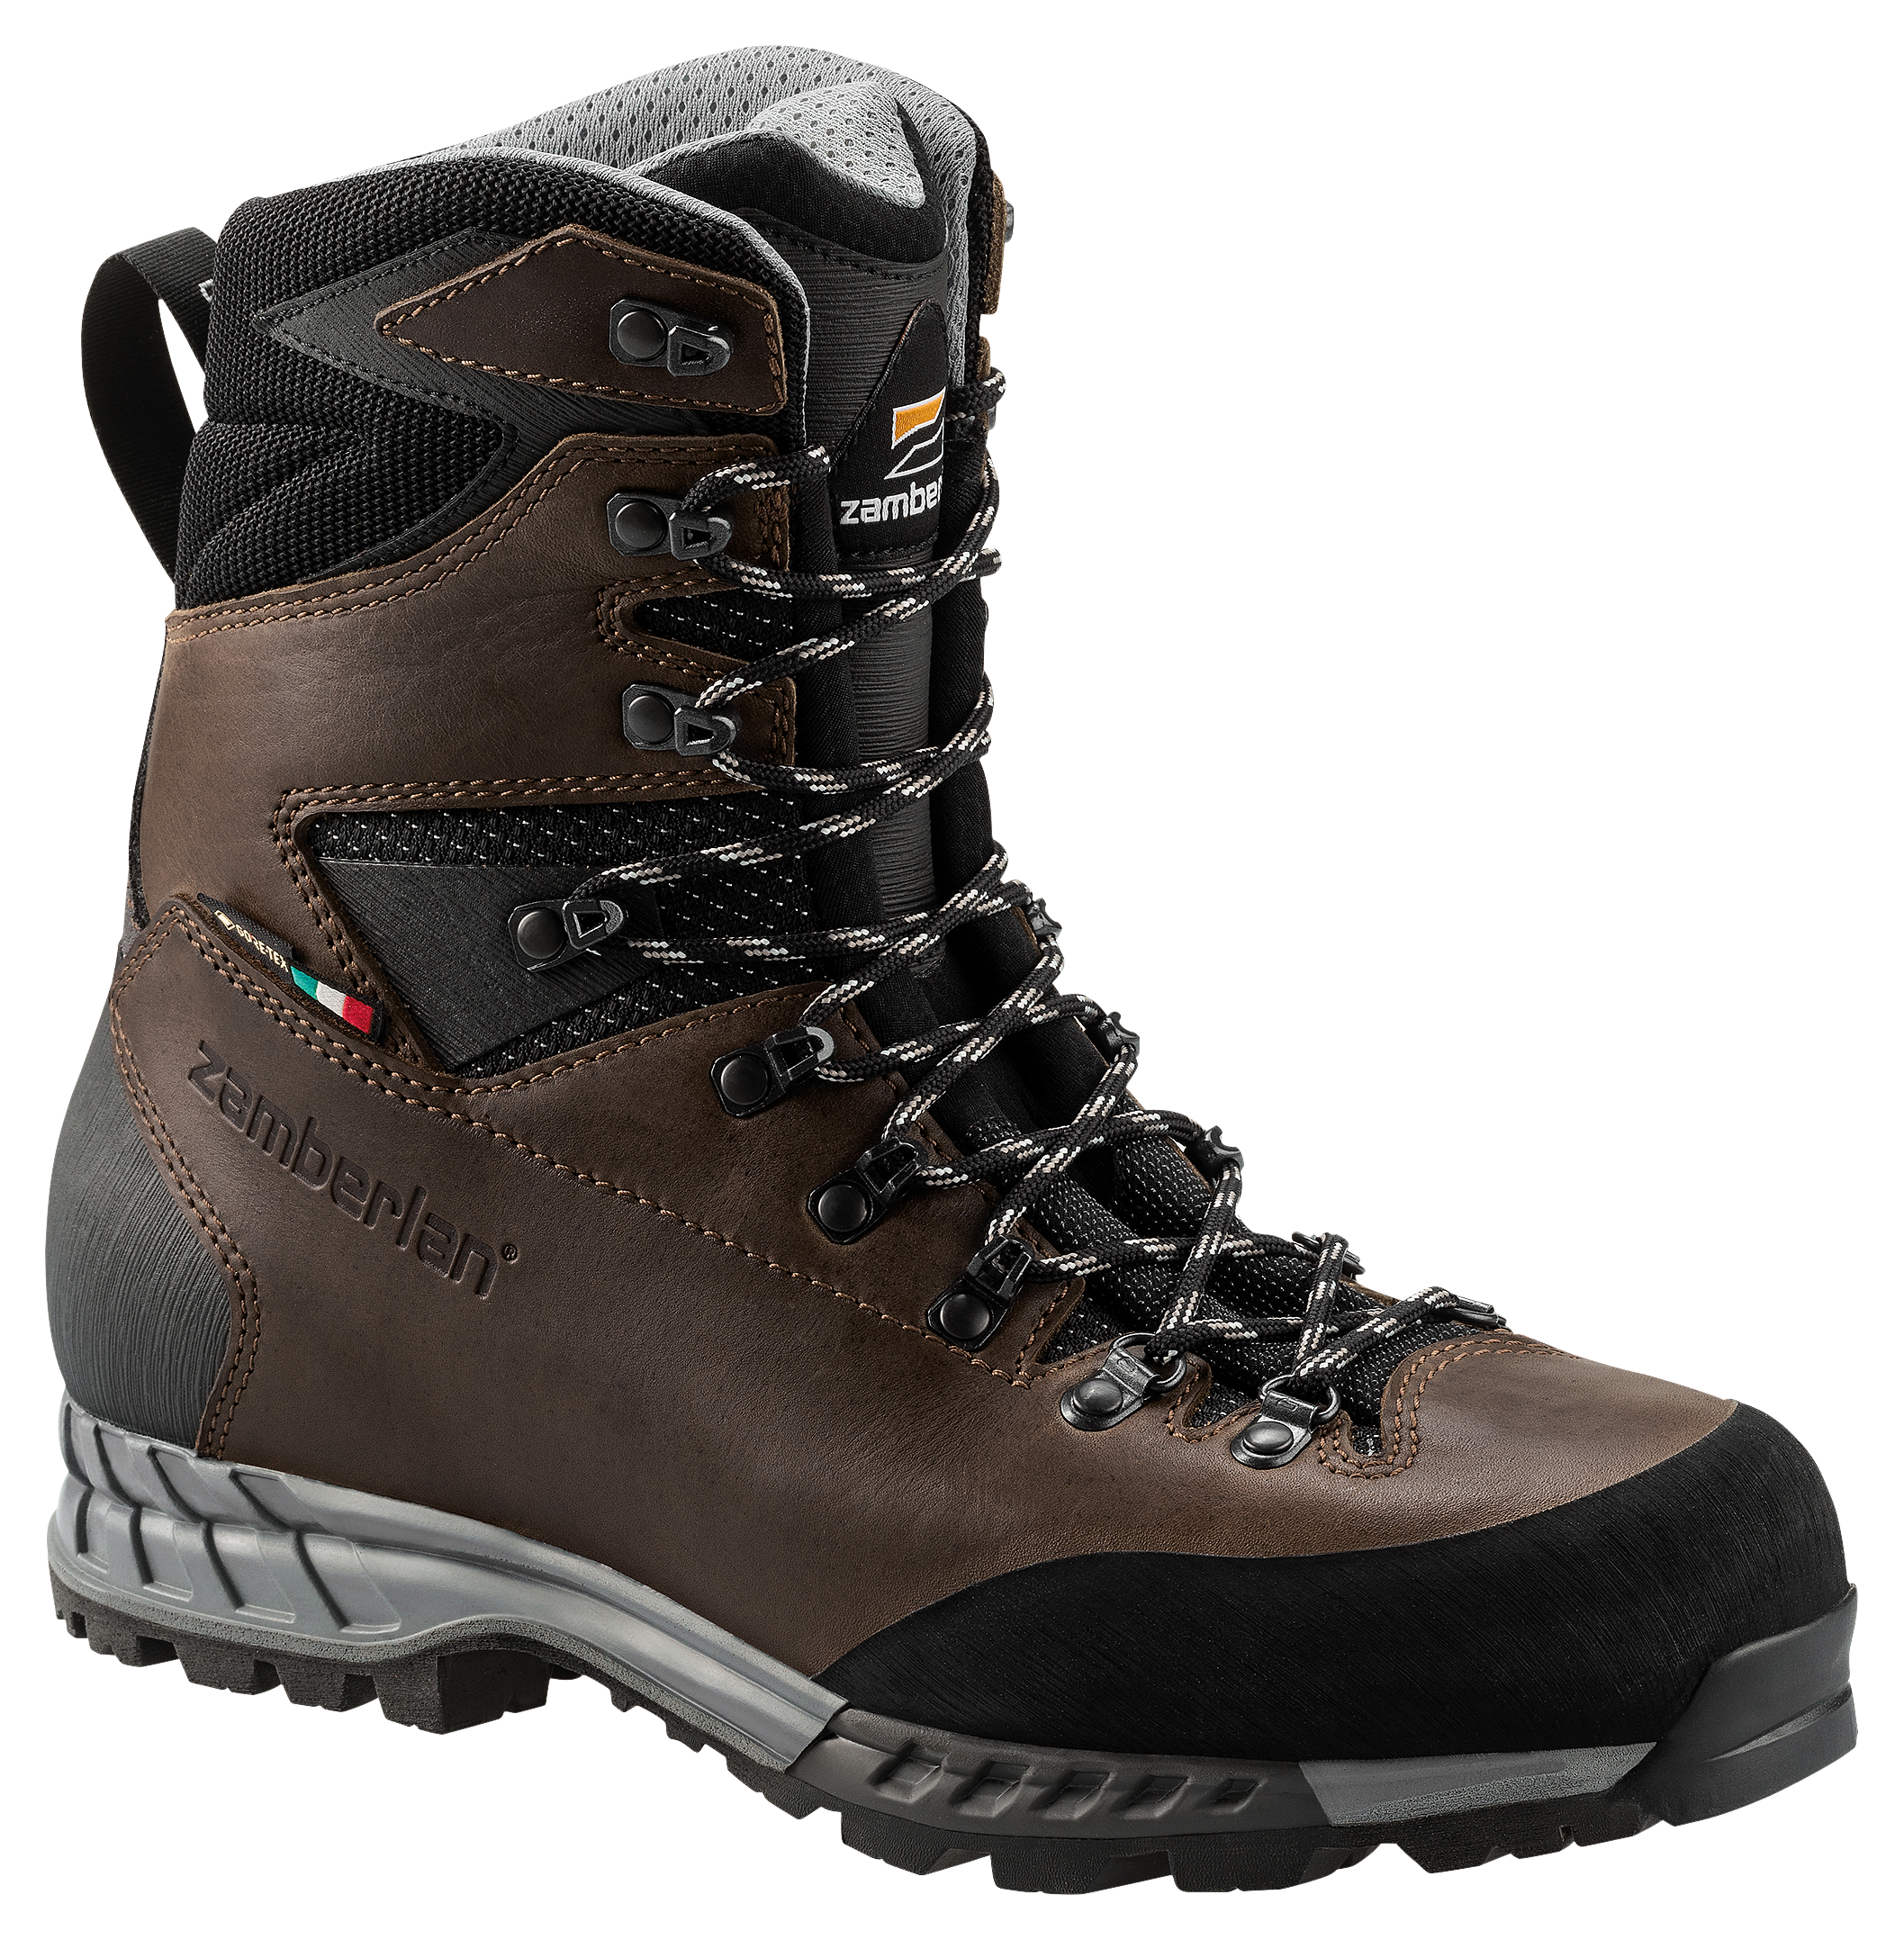 Zamberlan Cresta Alta GTX RR Hunting Boots for Men - Waxed Dark Brown - 8.5M